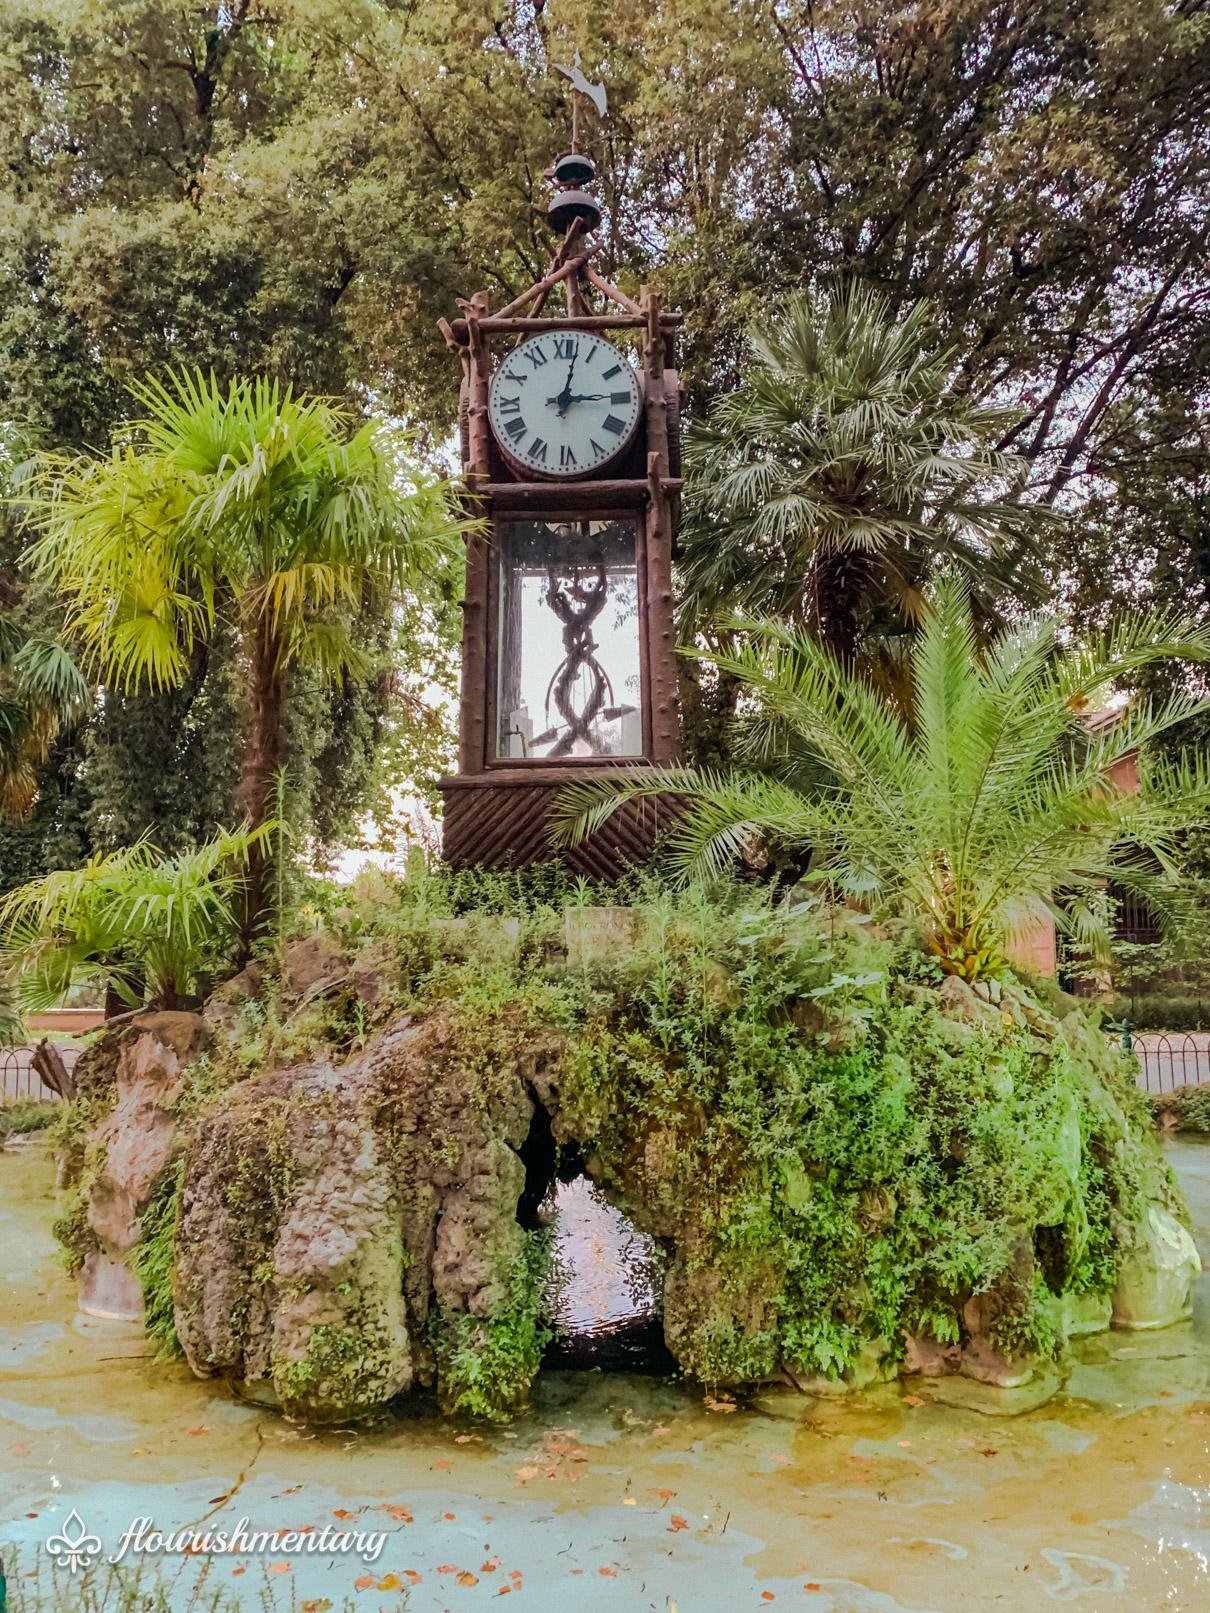 Villa Borghese Gardens Hydrochronometer